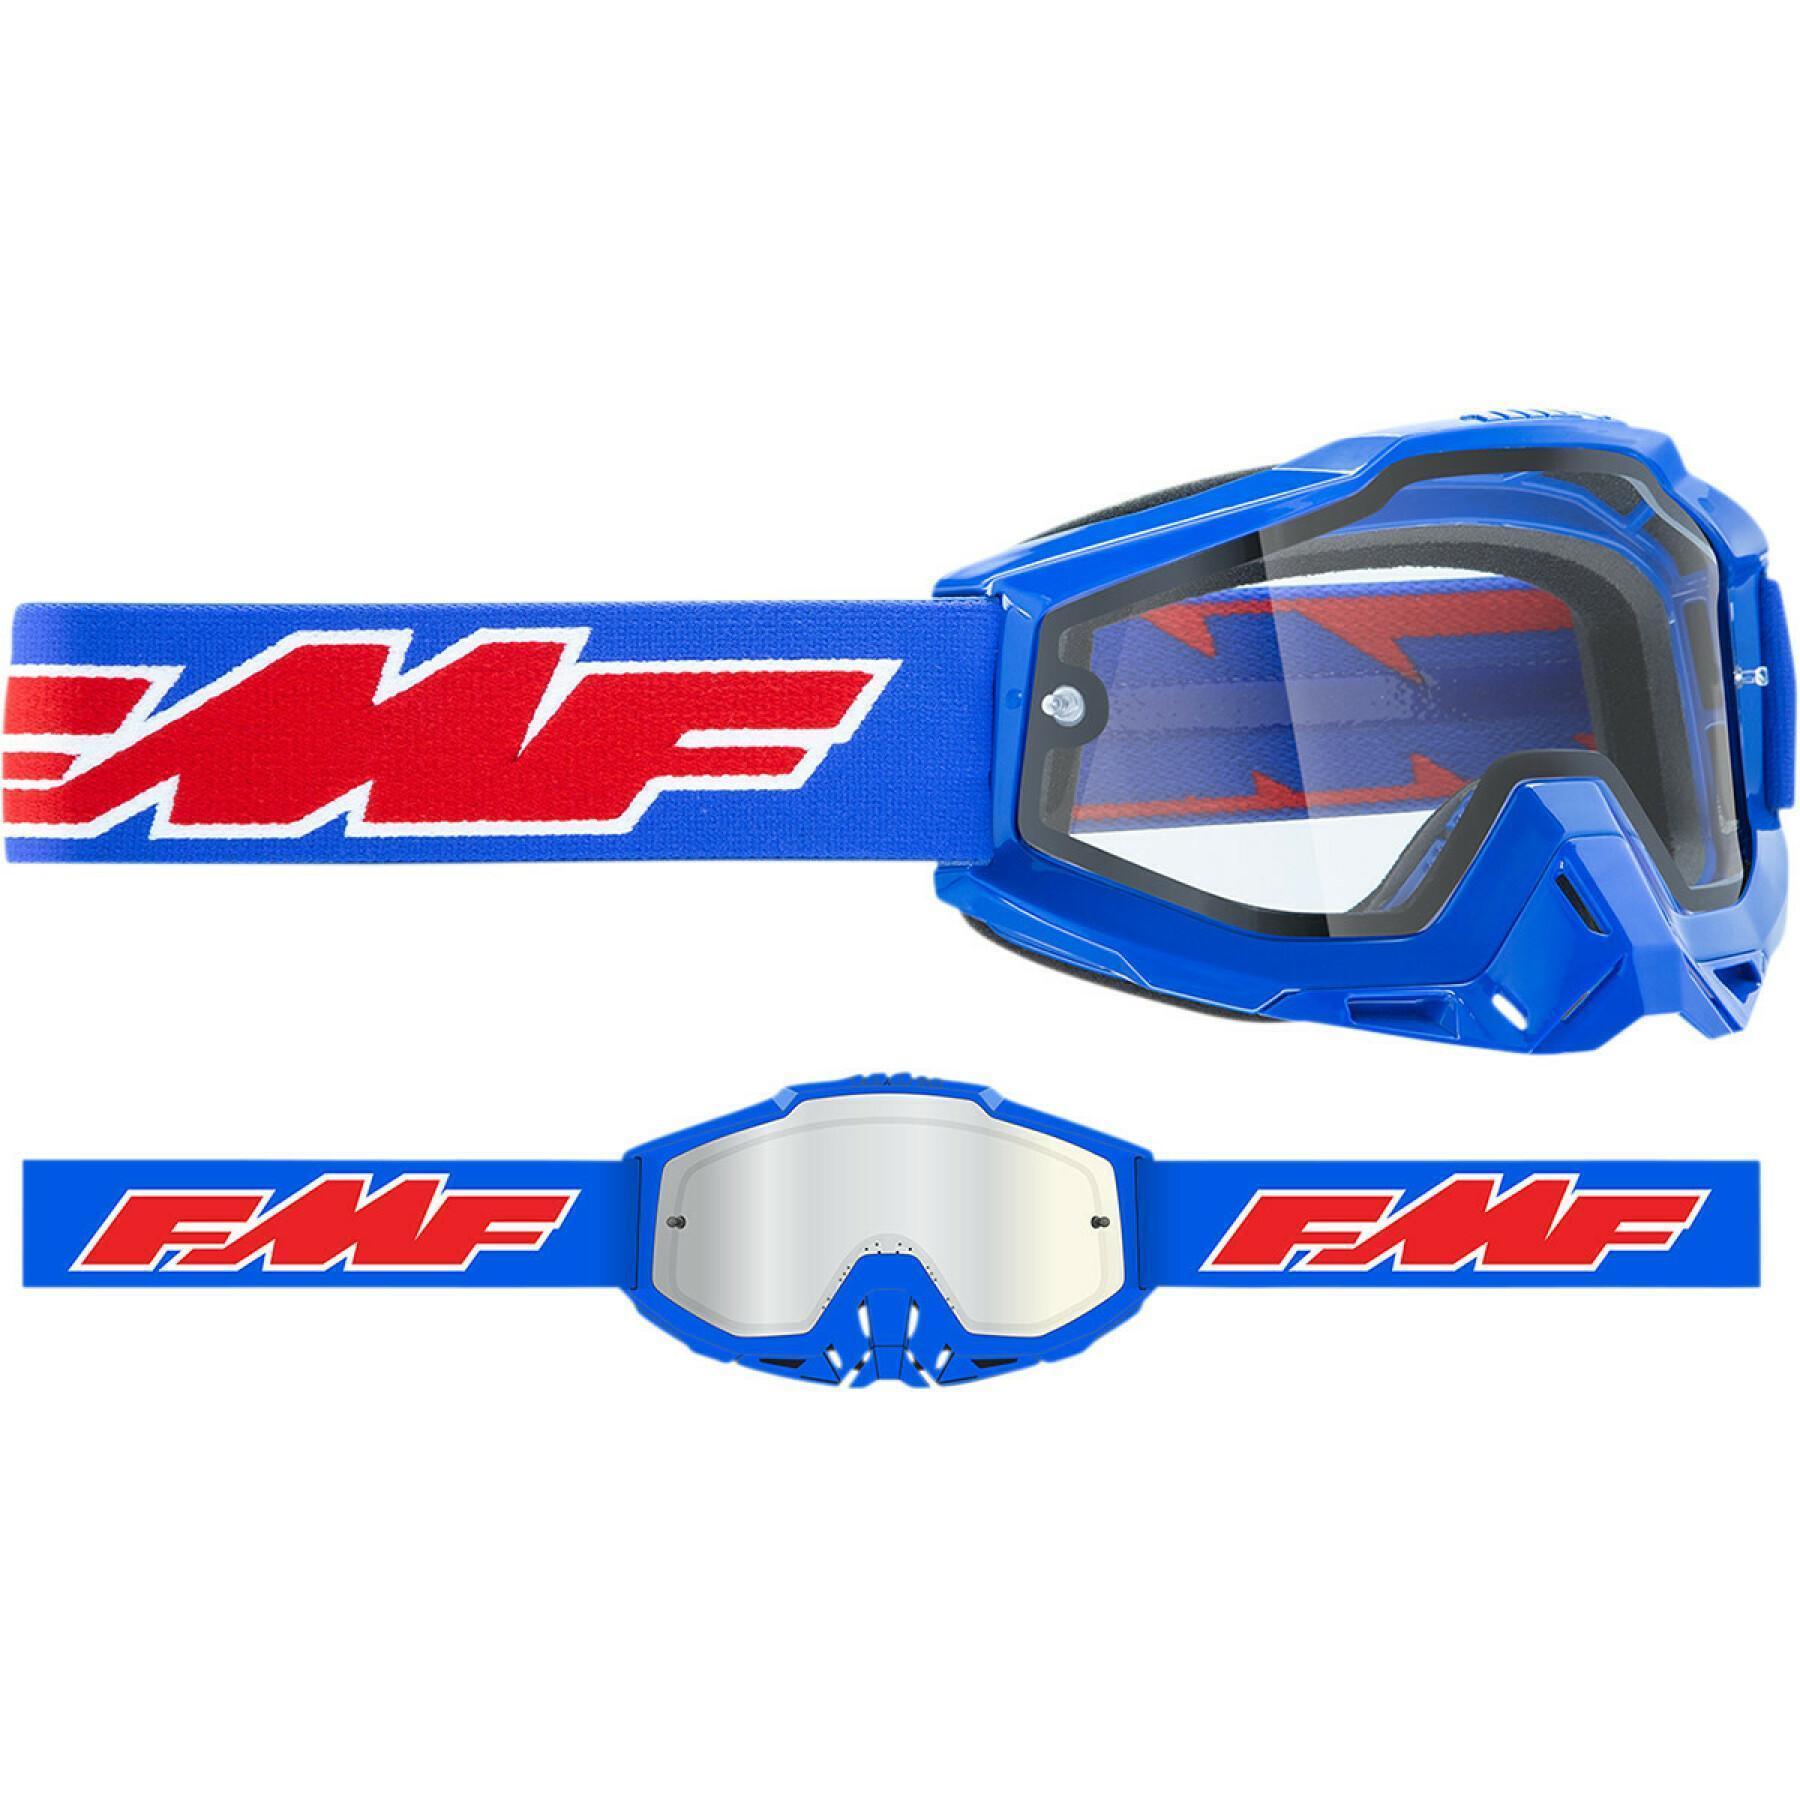 Motorcycle cross goggles FMF Vision endr rocket